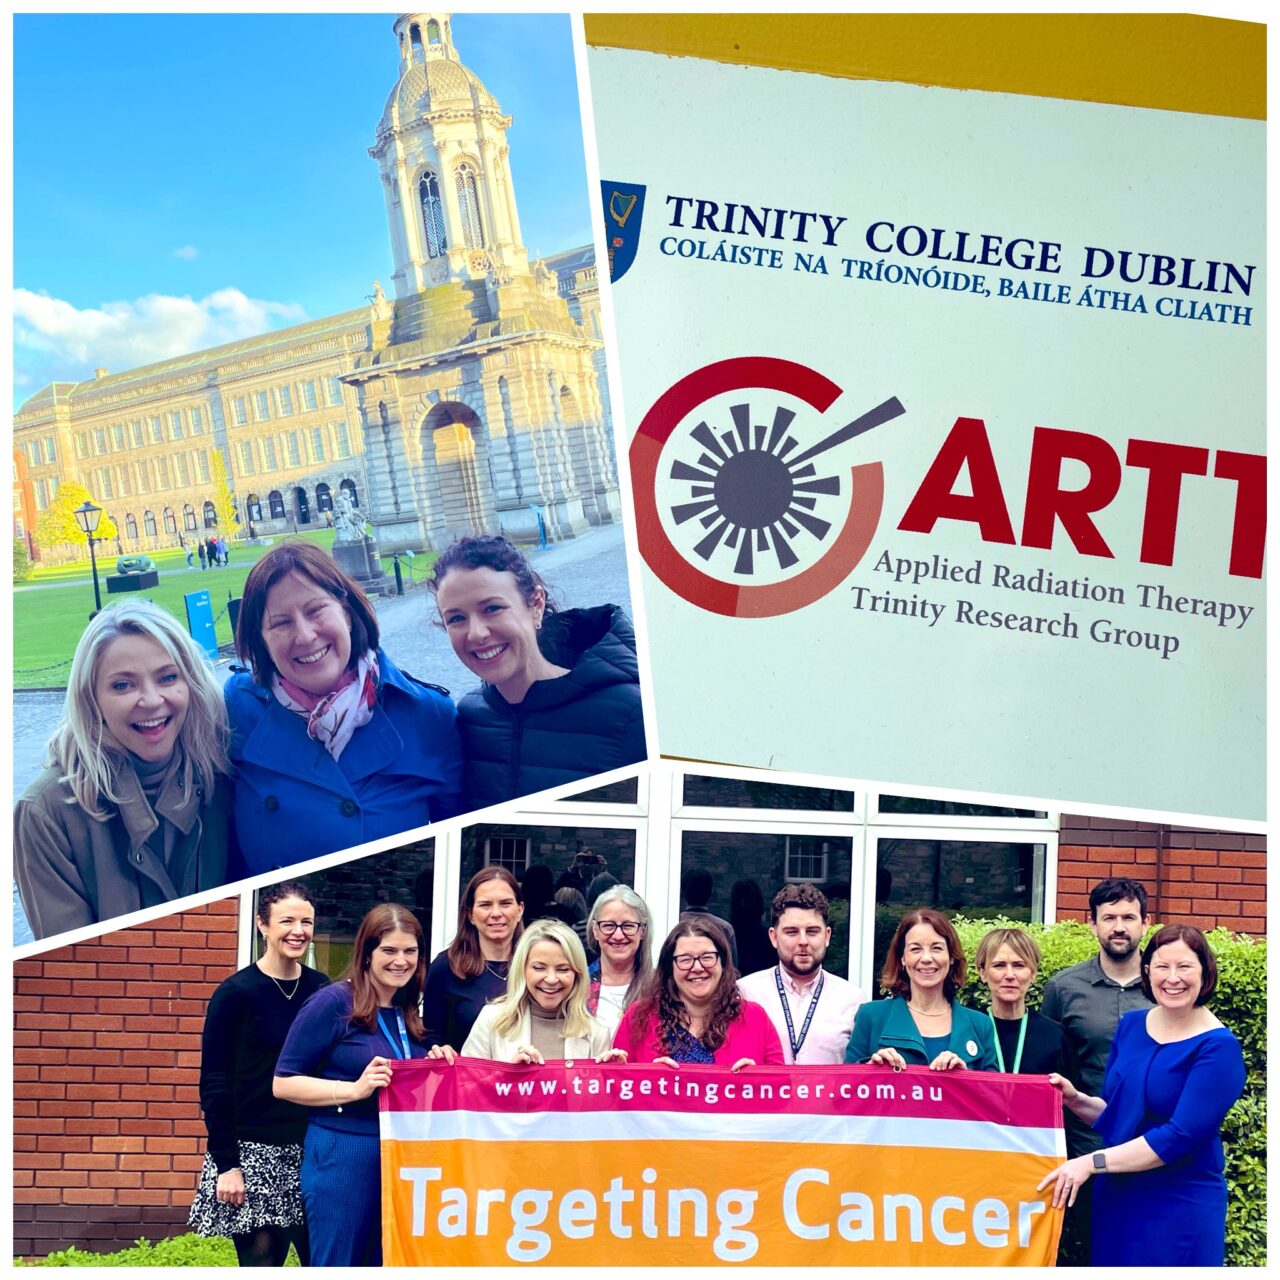 Sandra Turner: Brilliant day with Trinity College Dublin friends